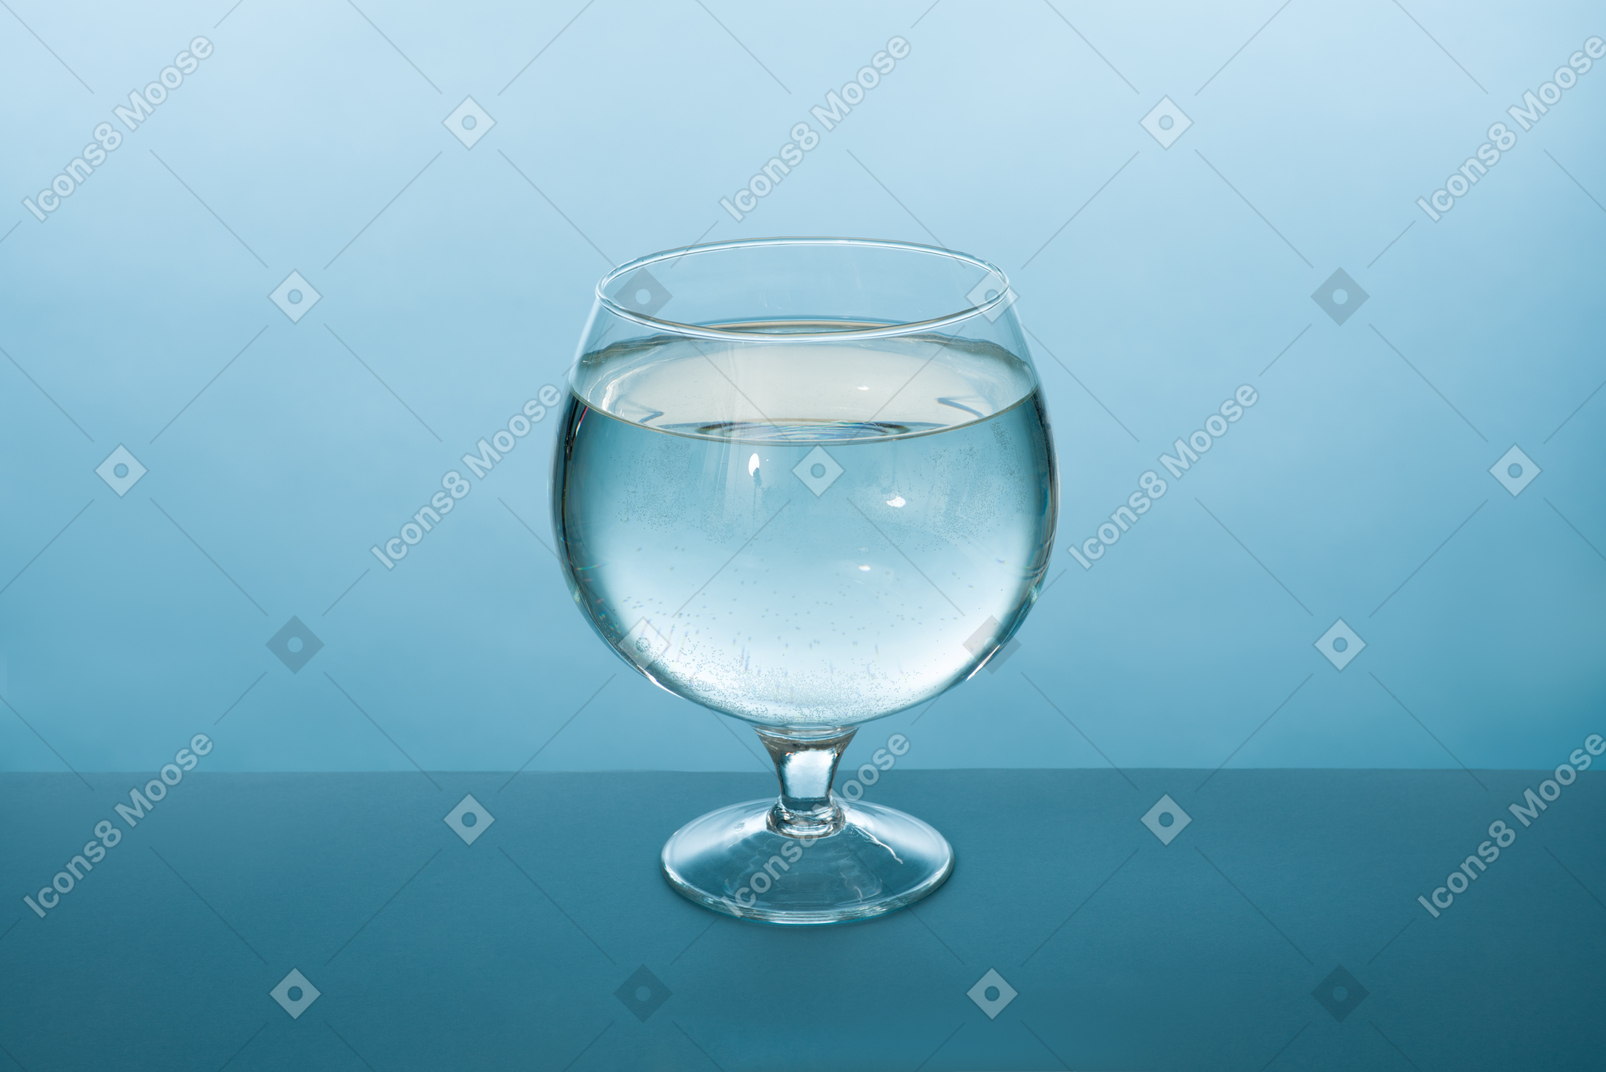 Brandy glass full of clean water